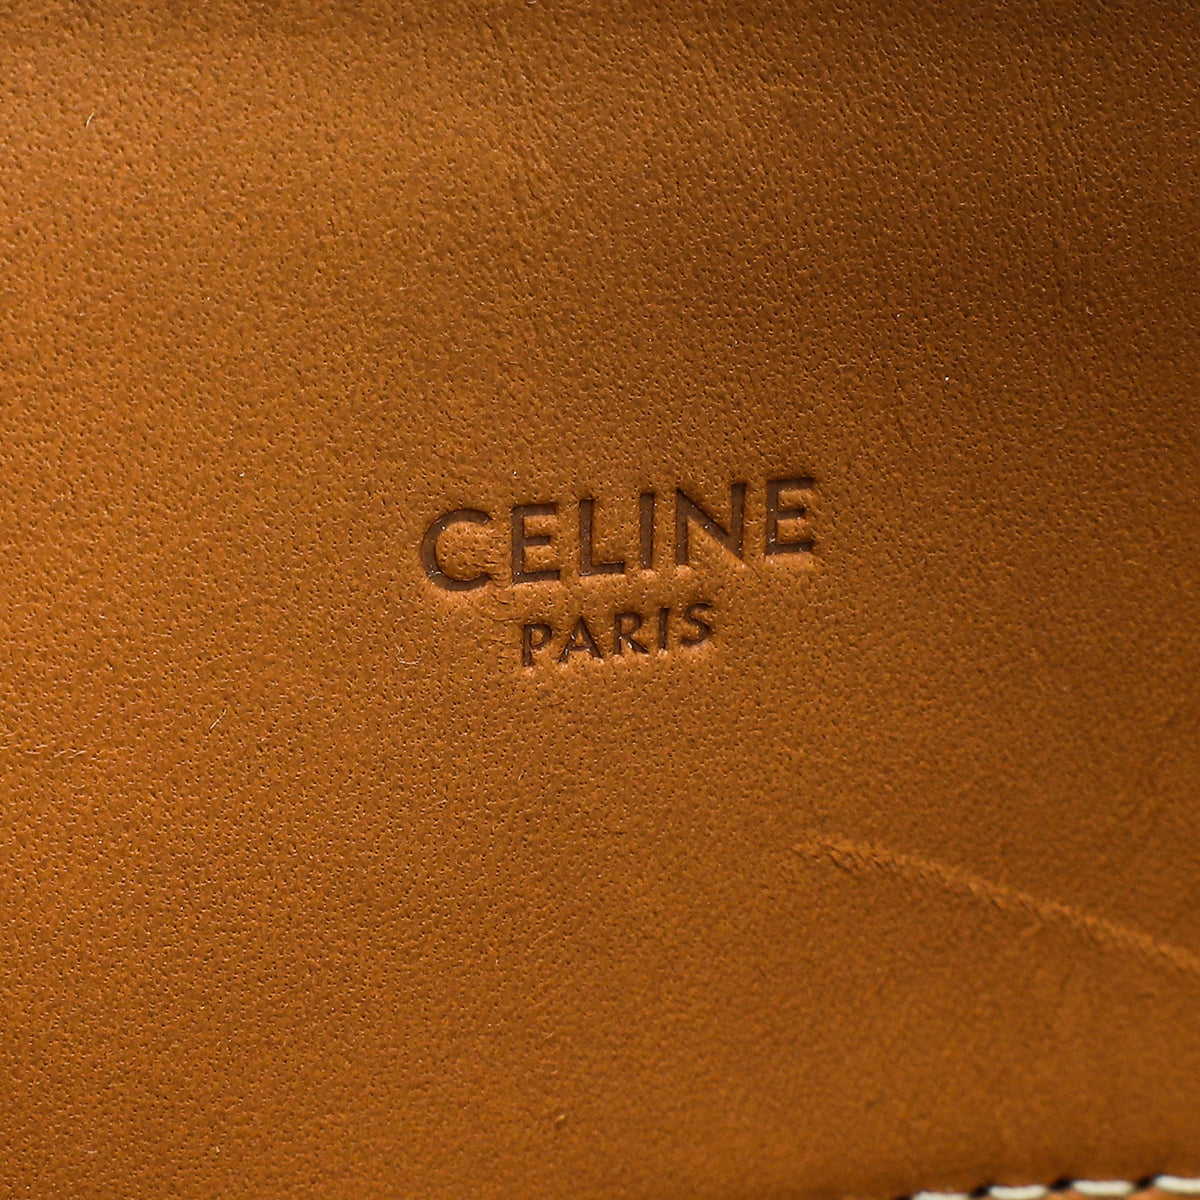 Celine Bicolor Vertical Cabas Small Bag